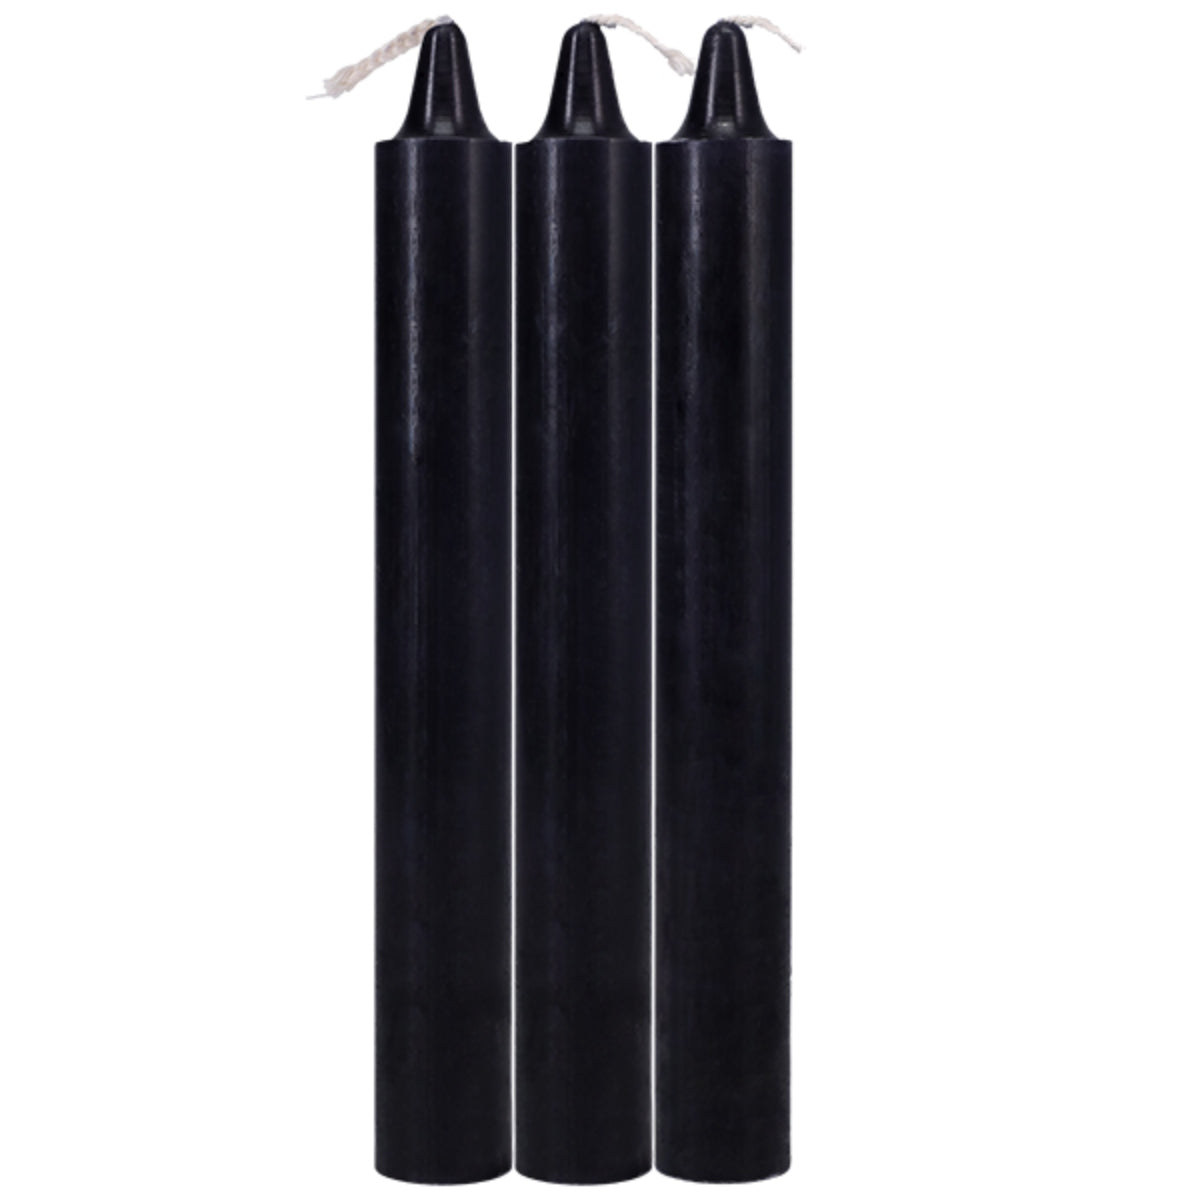 Doc Johnson Japanese Drip Candles 3 Pack Black (8106652631279)